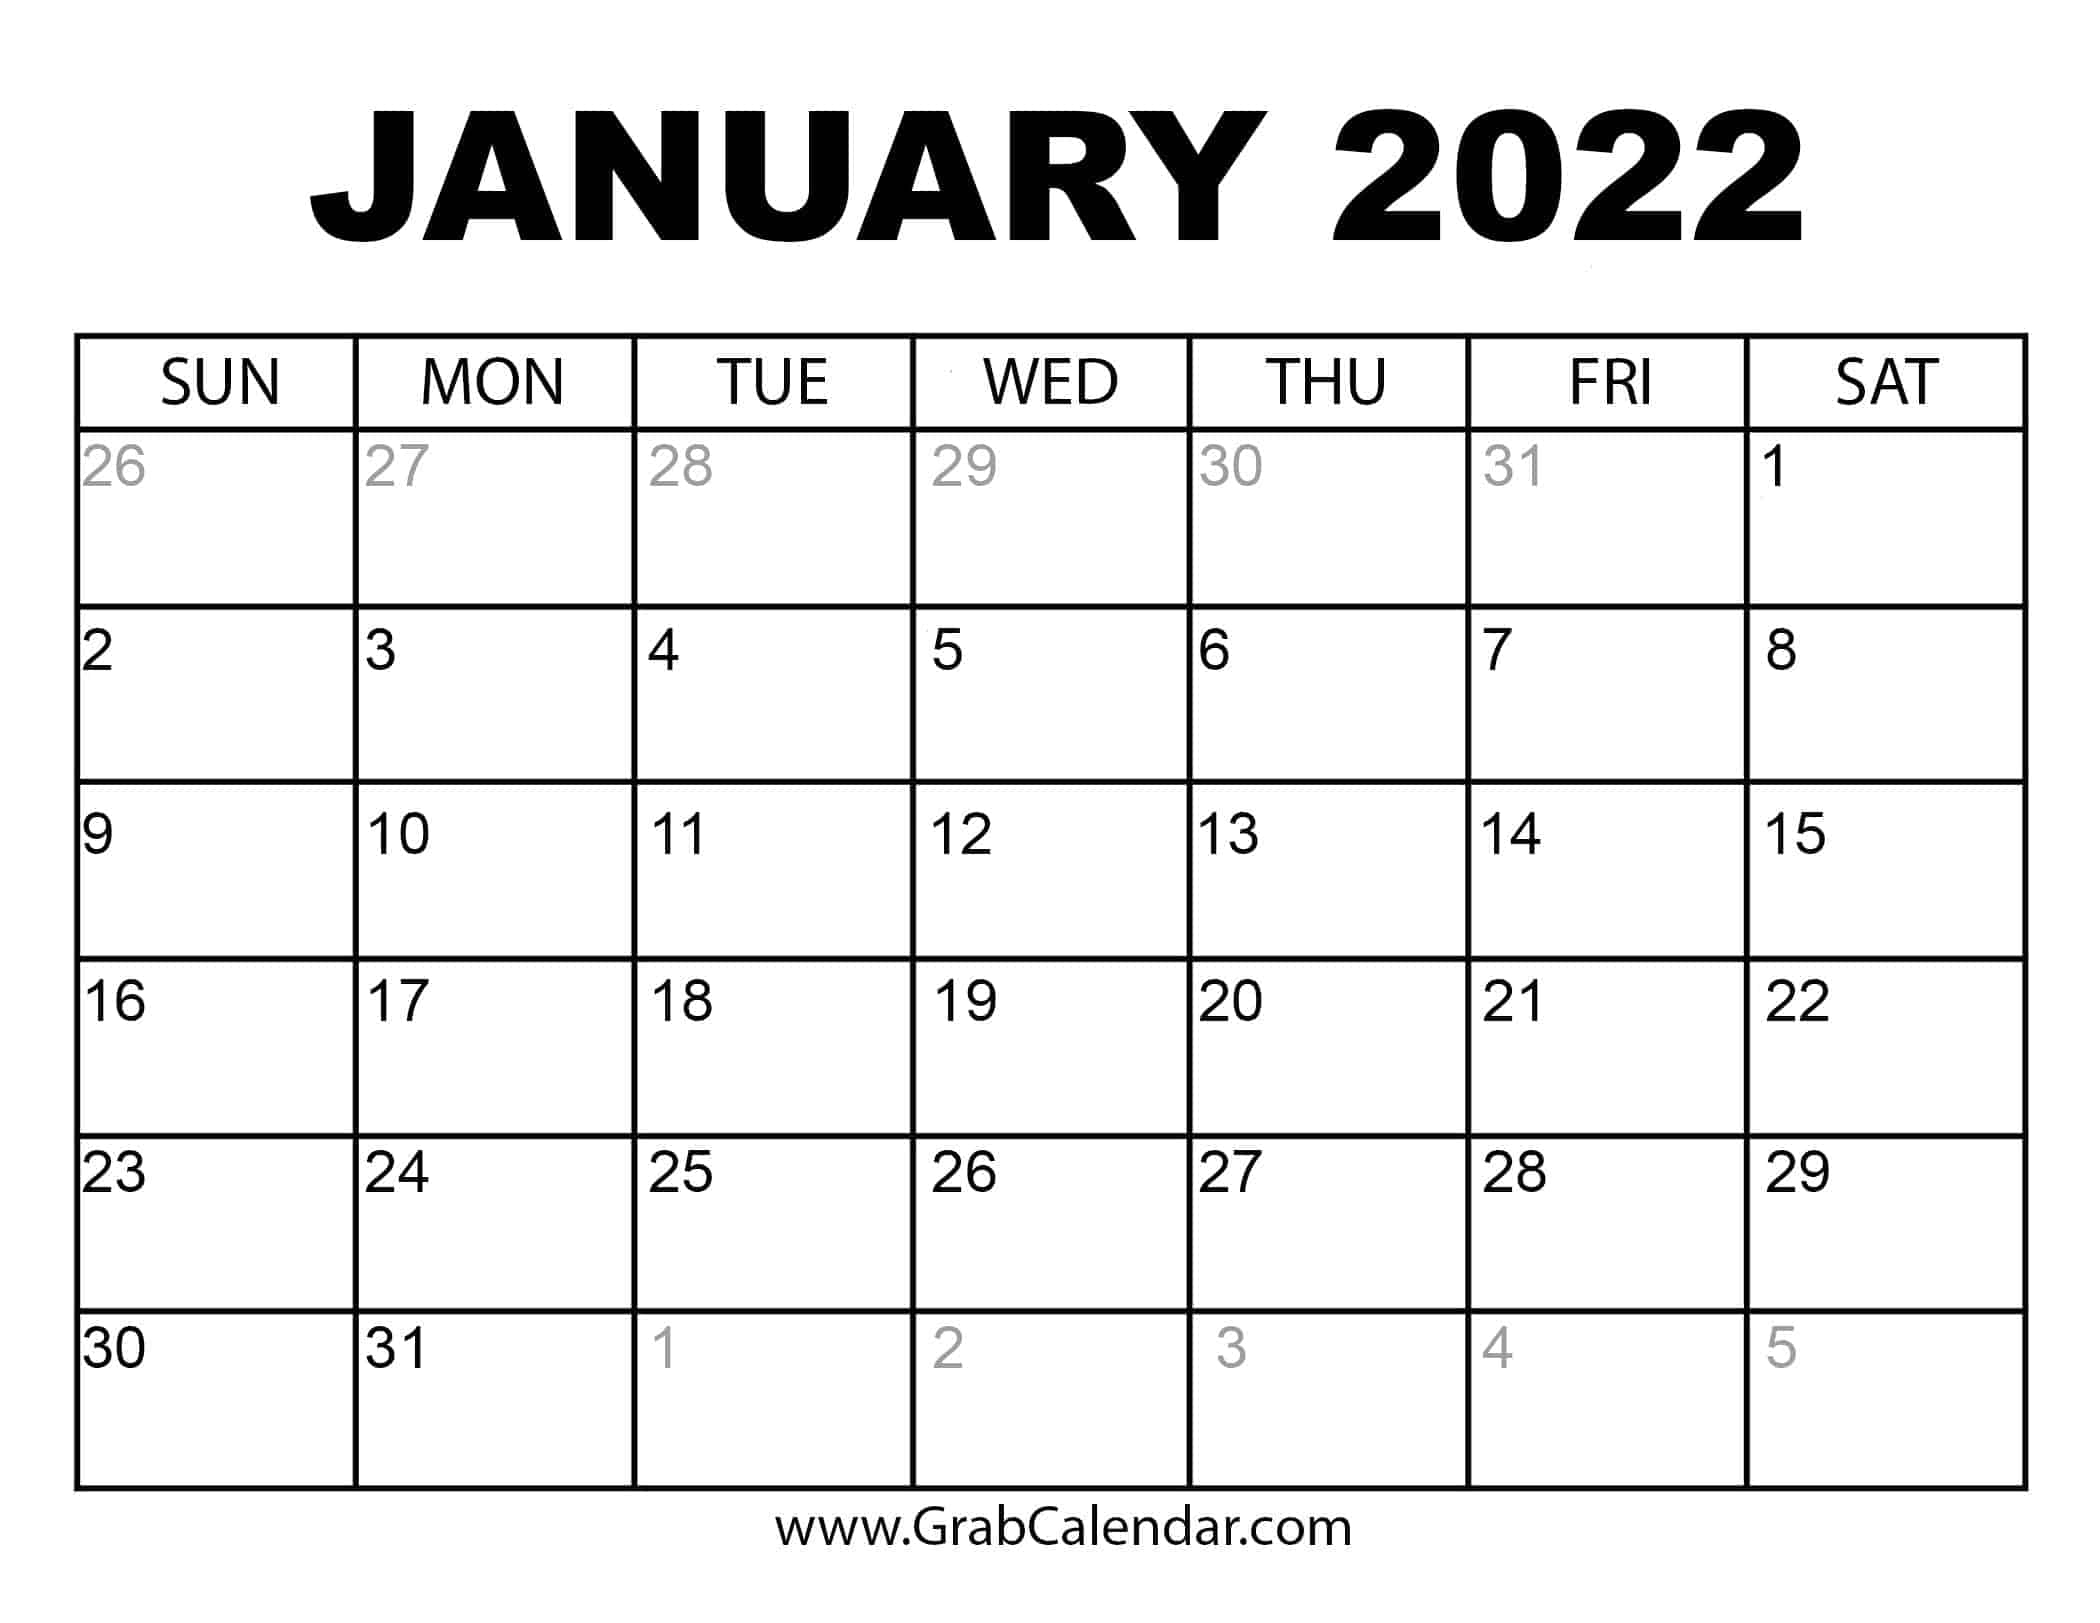 2021 And 2020 Calendar With Holidays Free | Avnitasoni regarding November 2022 Calendar Word Avnitasoni